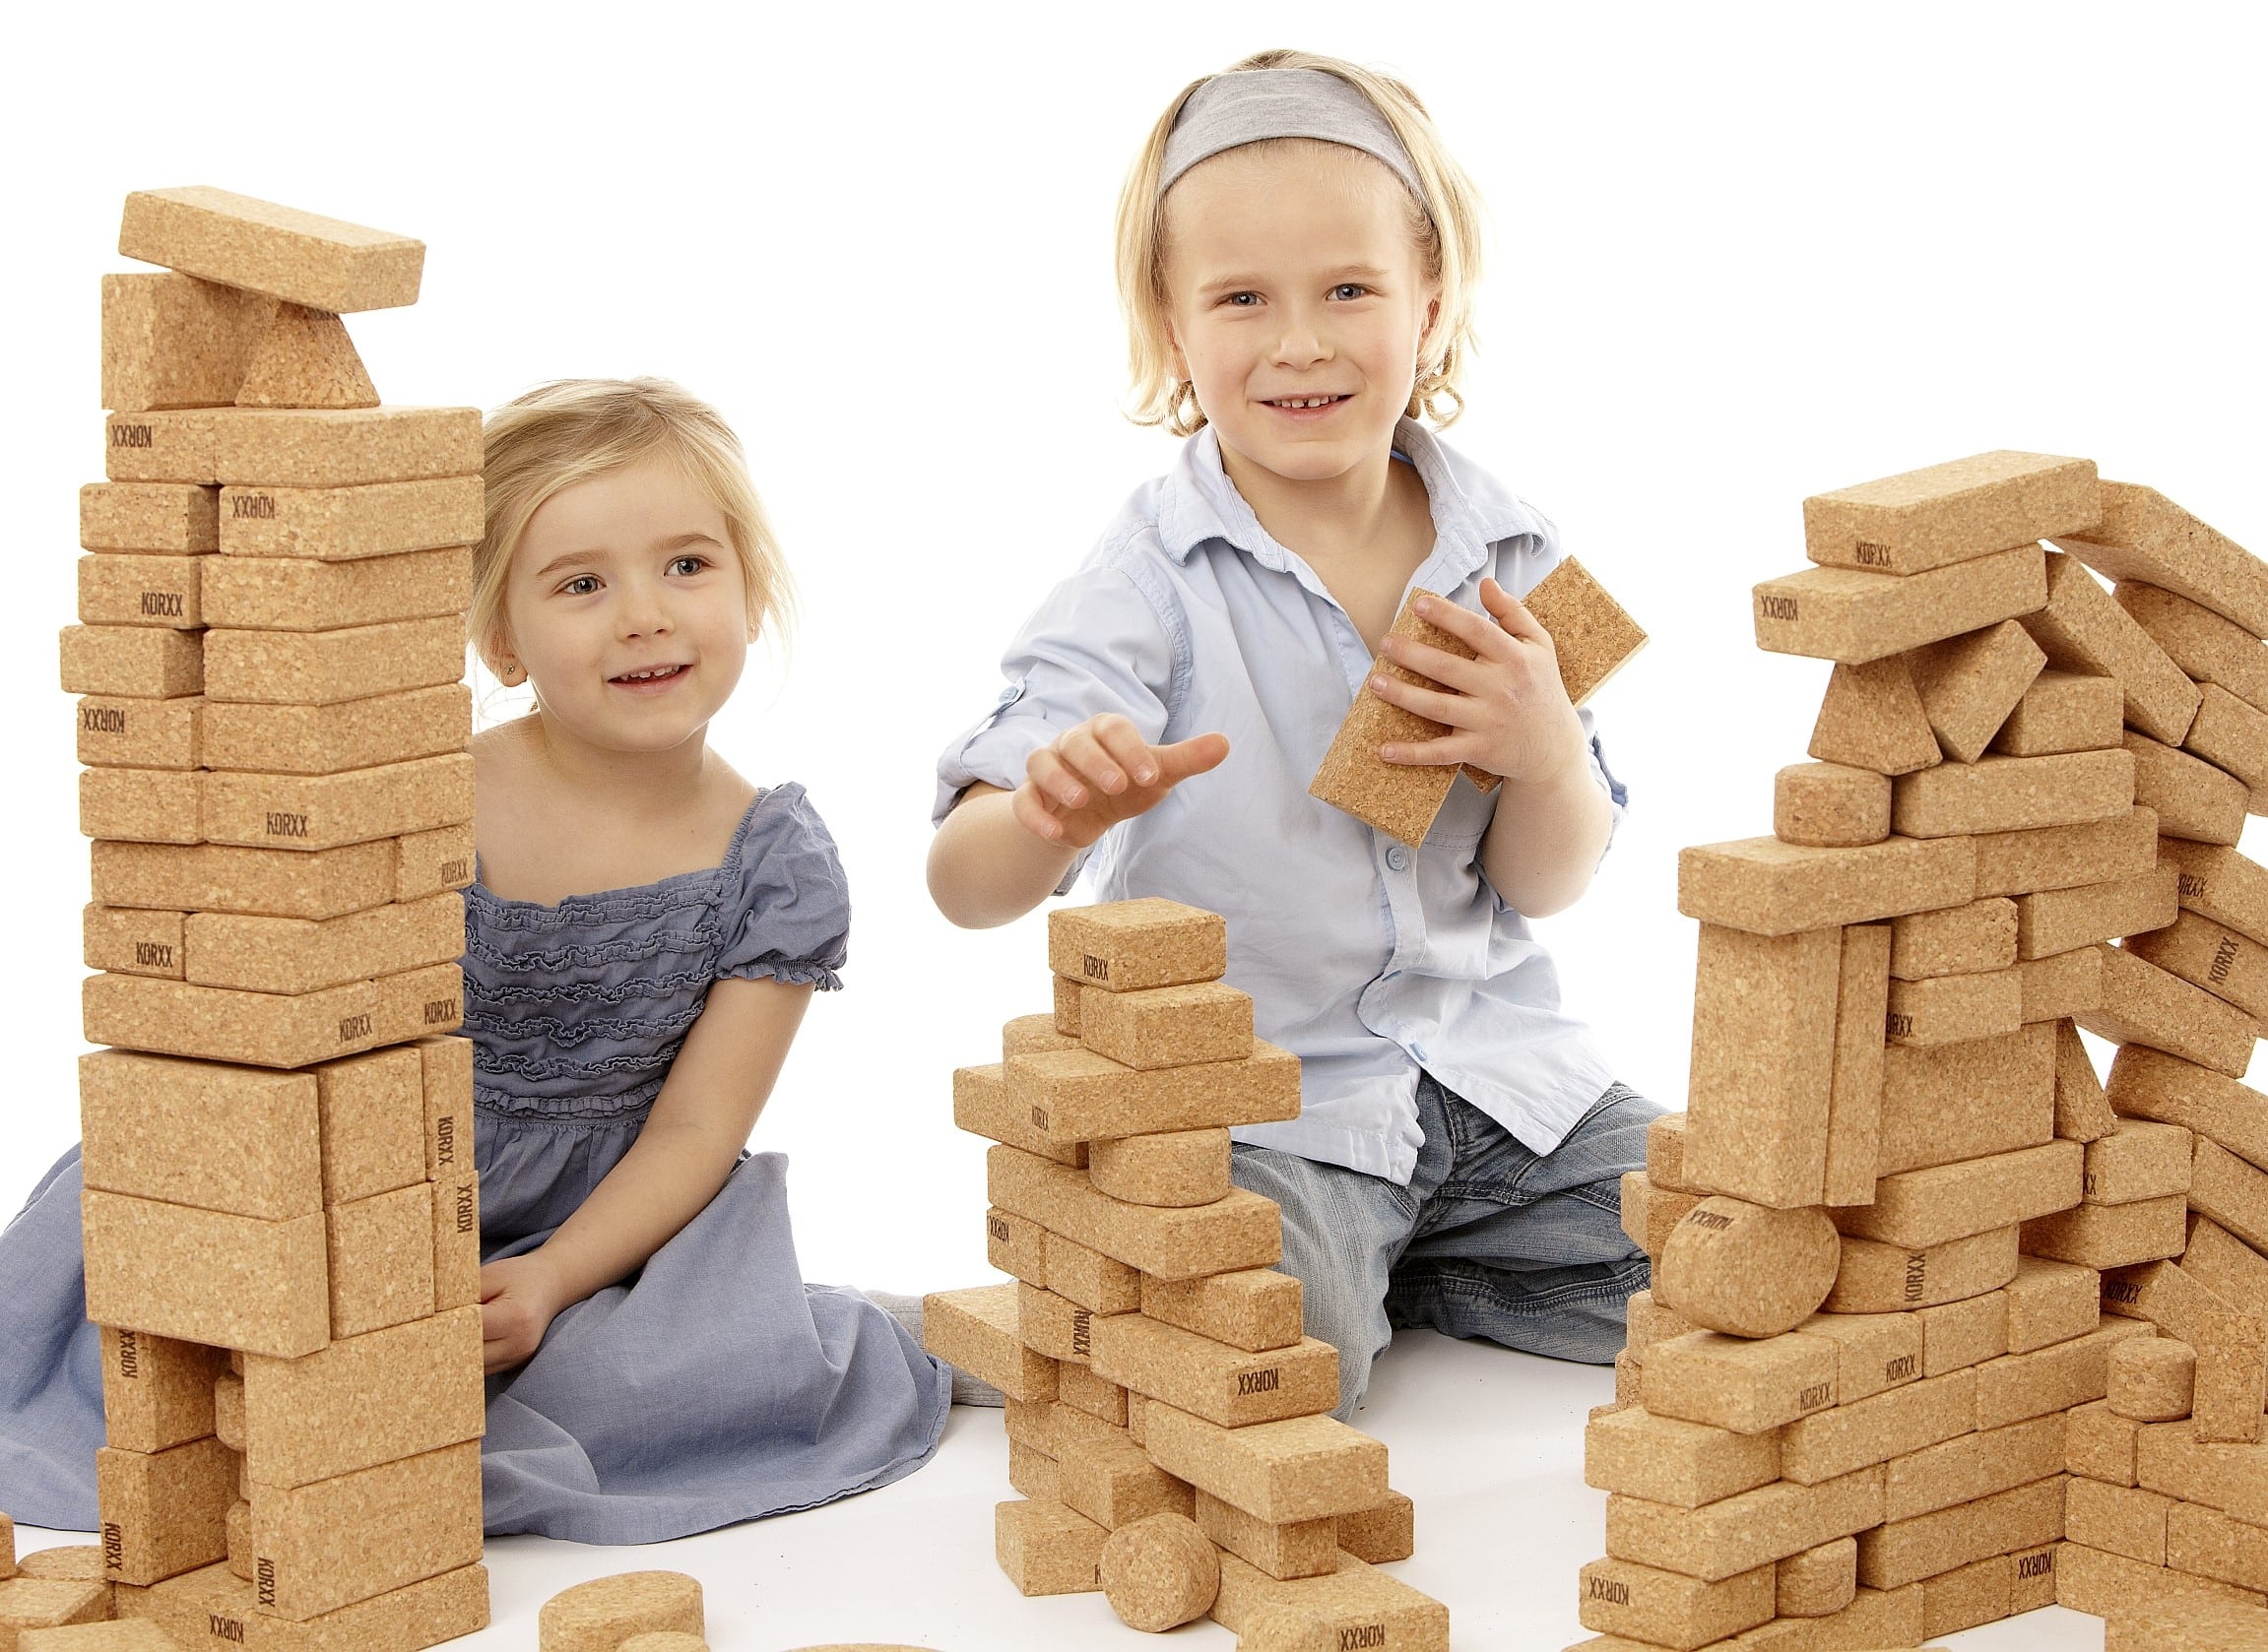 korxx_cork_toys_building_blocks_children_playing-min